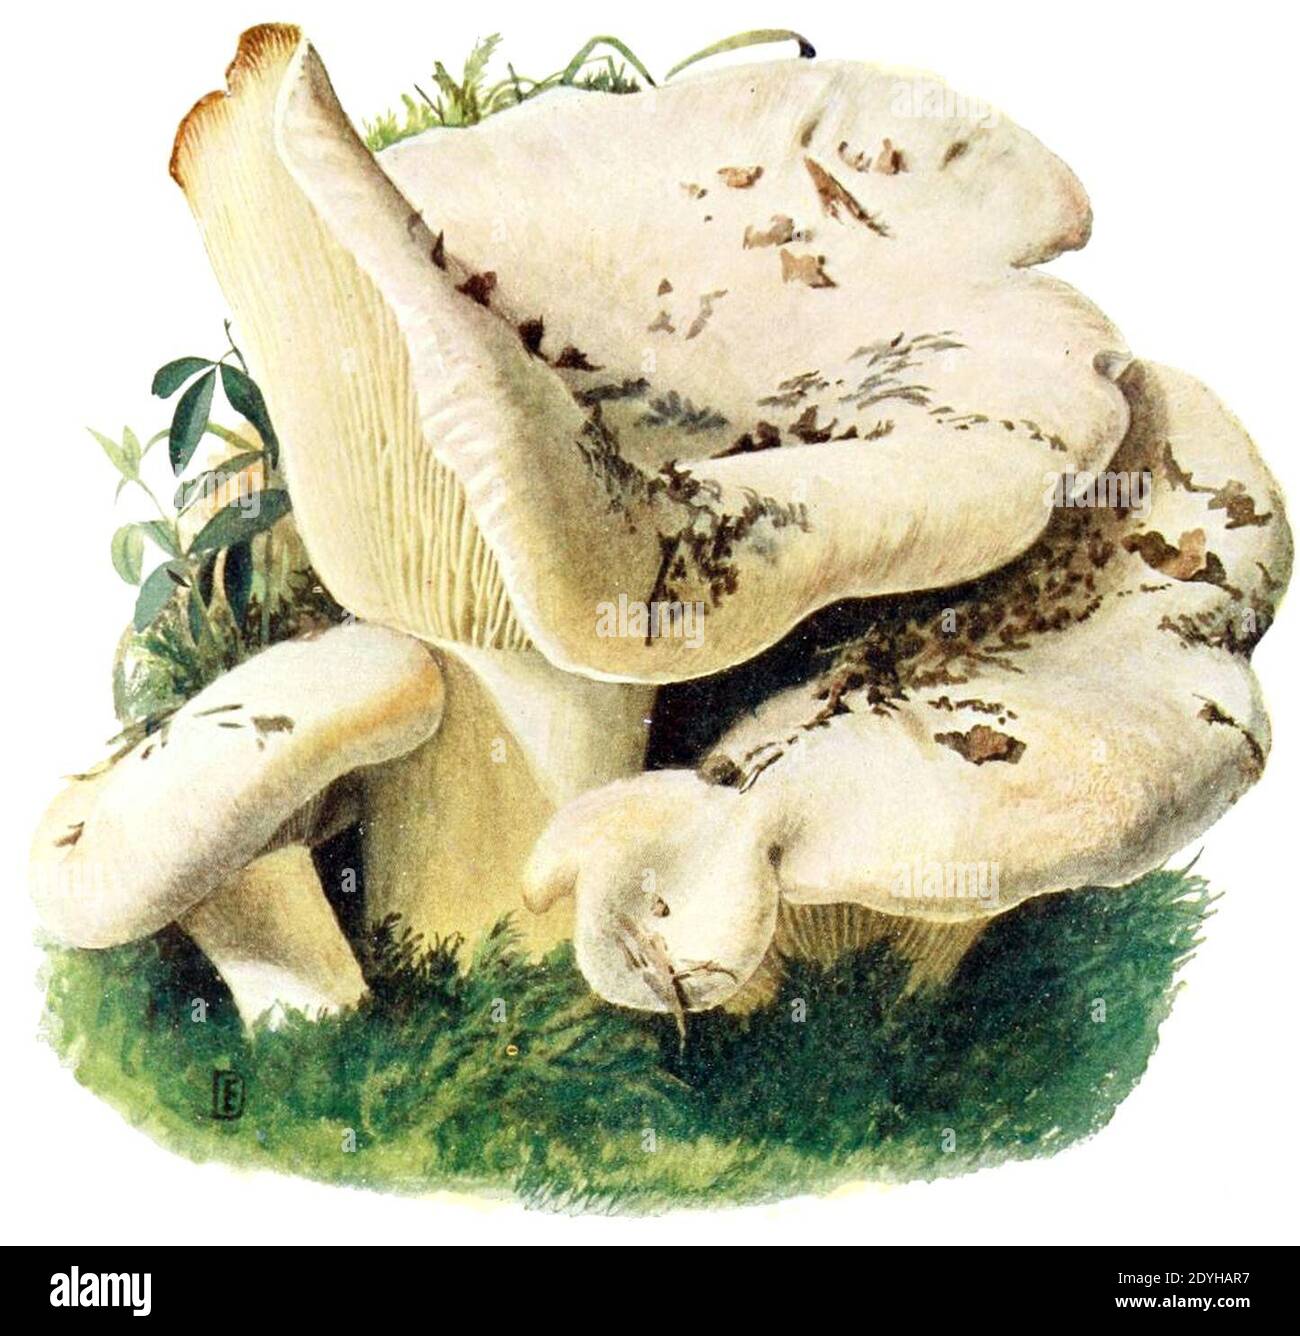 Lactarius-vellereus-gramberg-1913-pilzederheimatei00gram 0057. Stock Photo